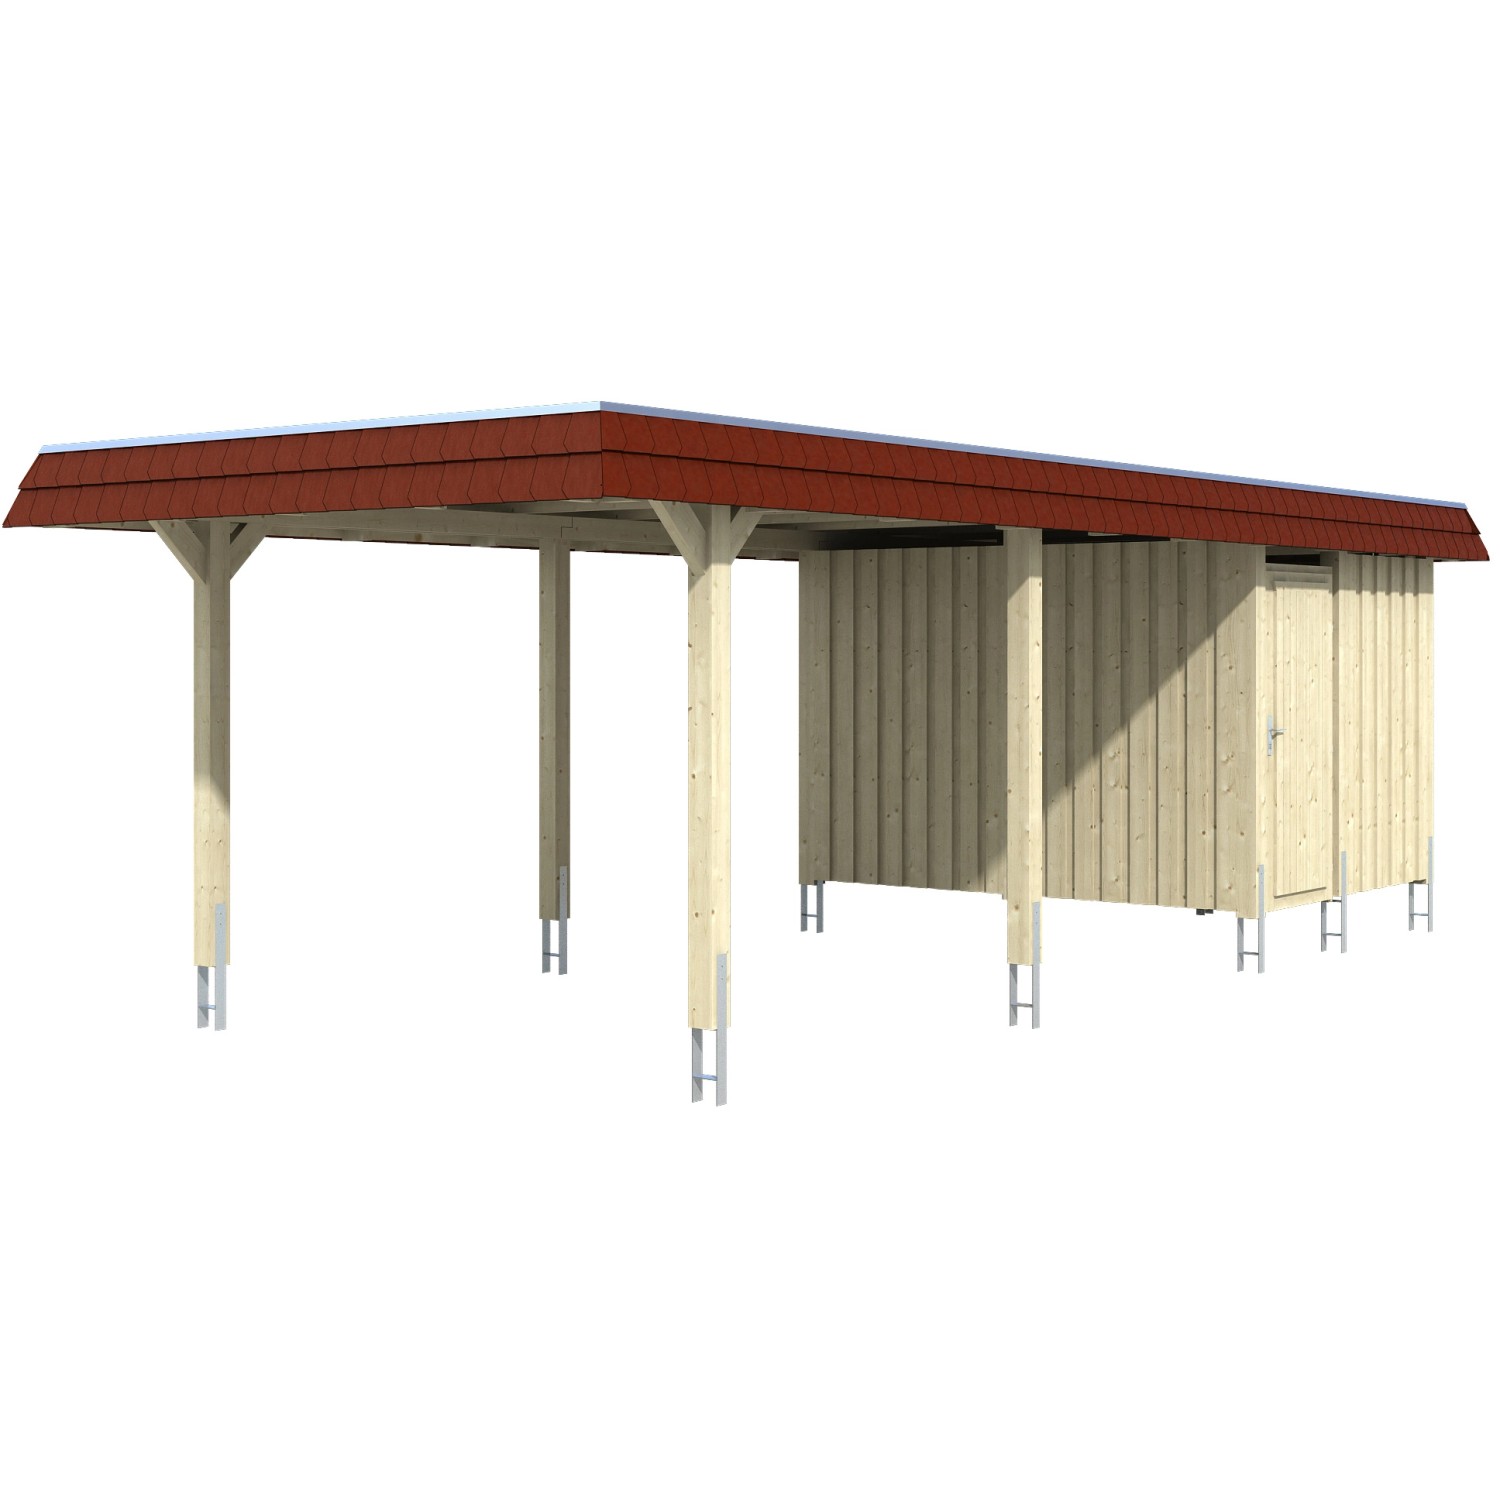 Skan Holz Carport Wendland Nussbaum + Anbau 362 x 870 cm EPDM-Dach Blende Rot von Skan Holz